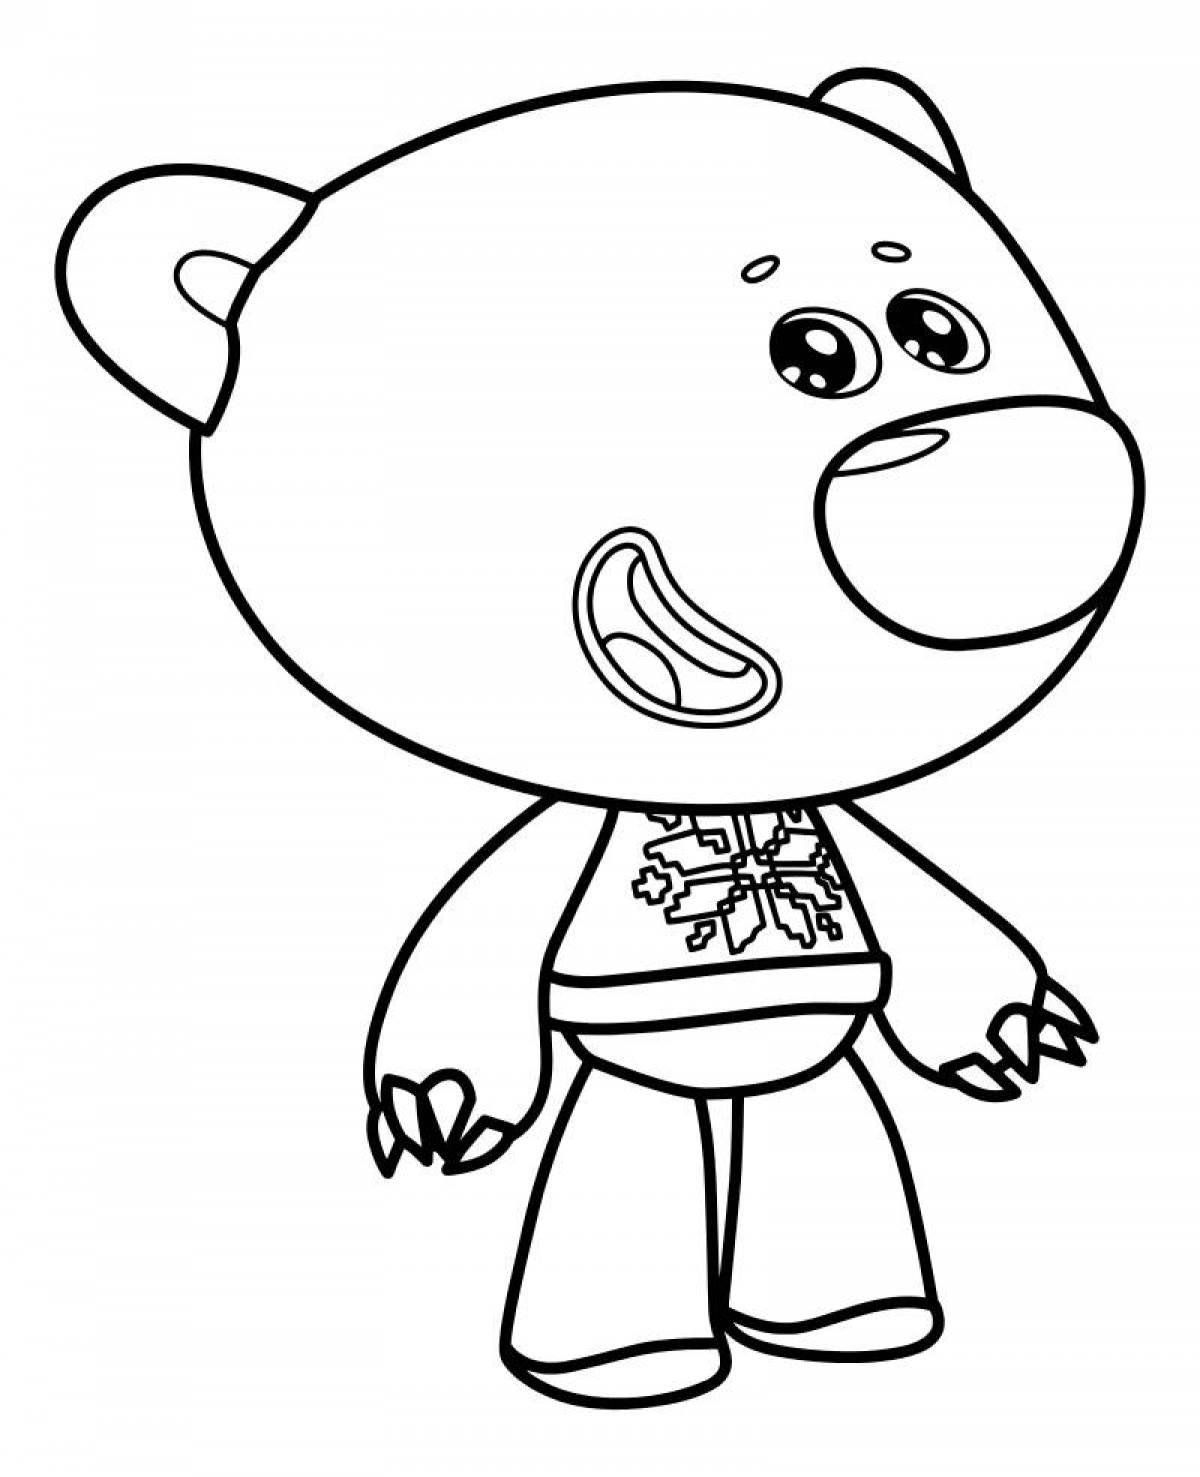 Humorous coloring bears for kids